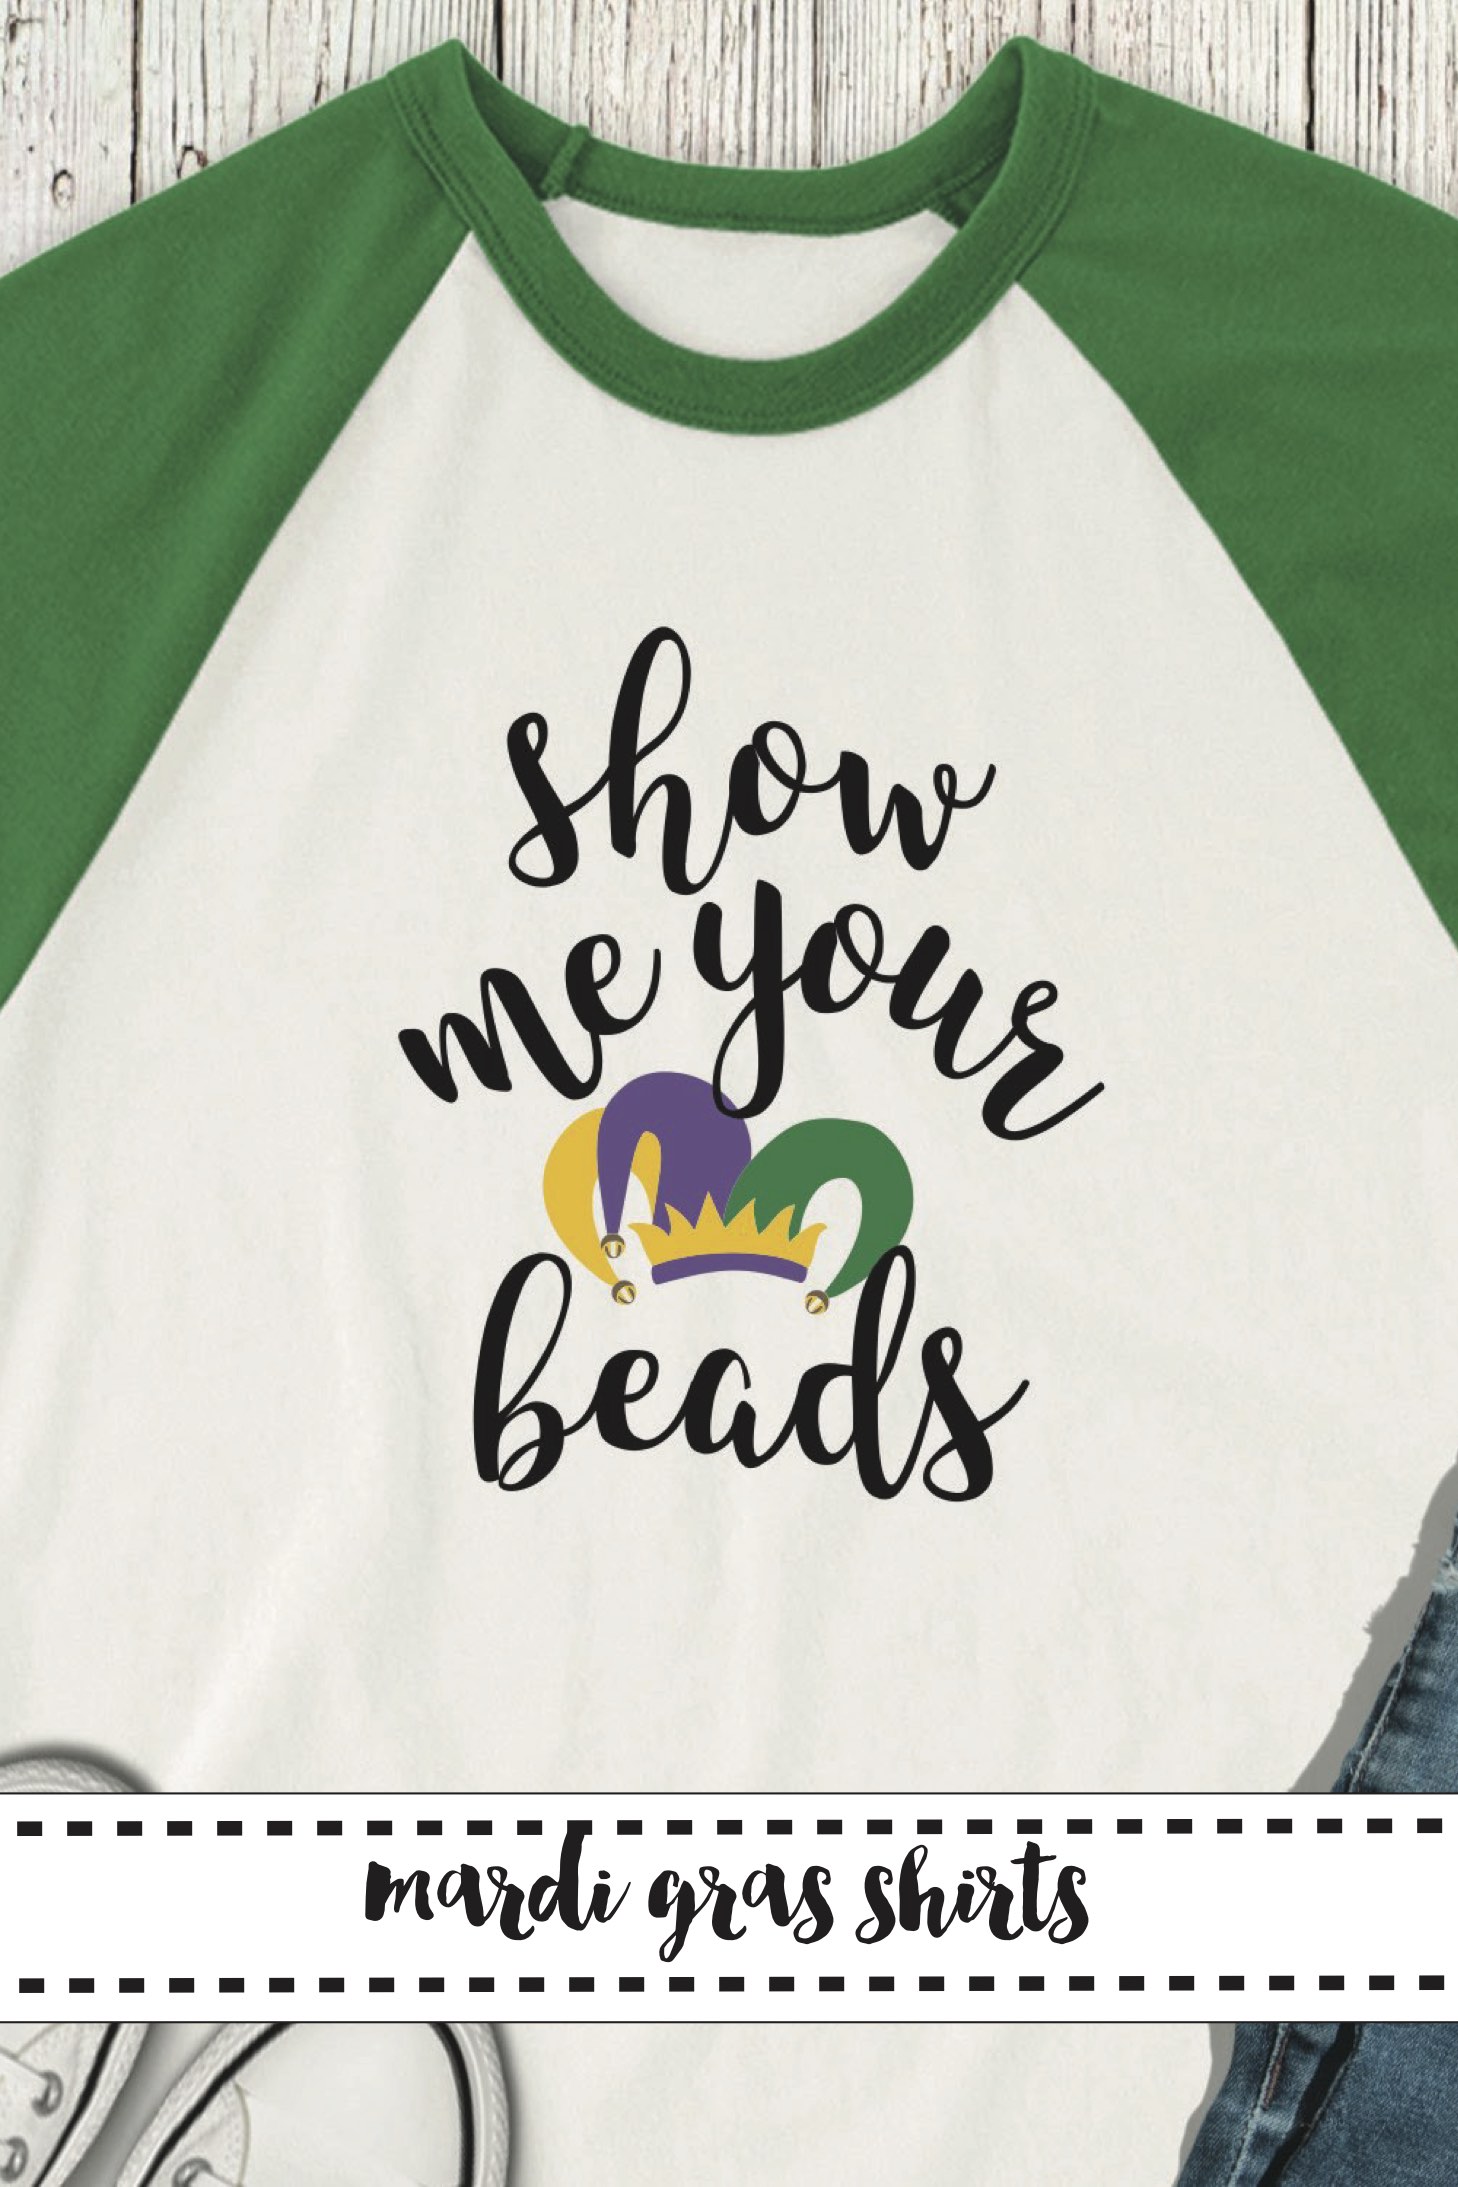 Show me your beads Mardi Gras shirt